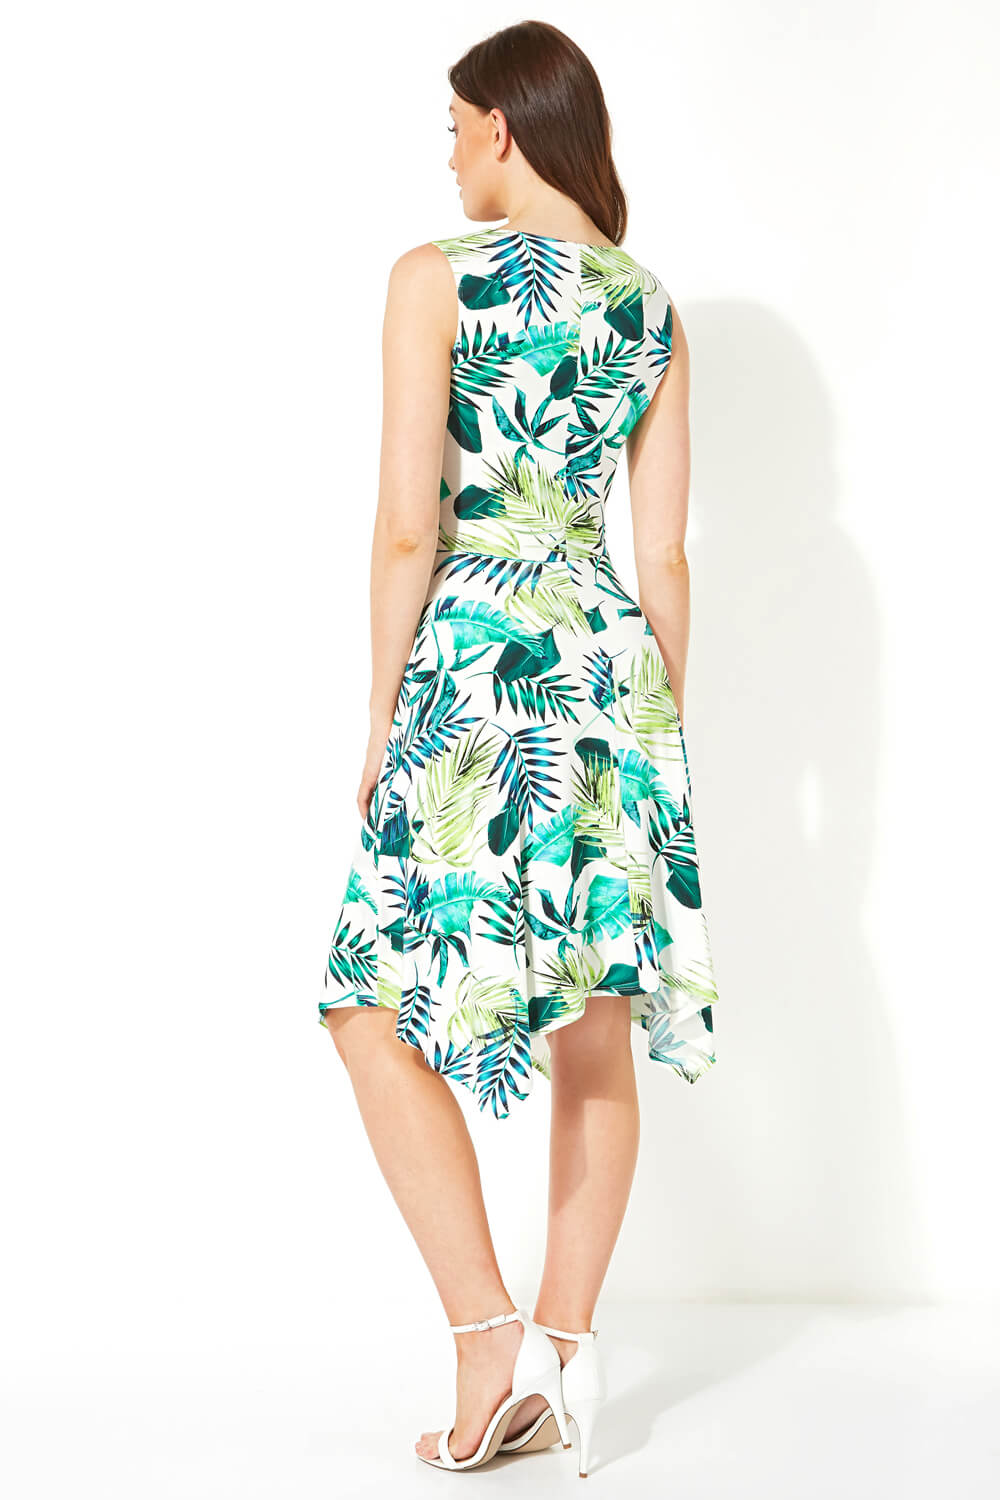 Green Palm Print Twist Front Dress, Image 3 of 5